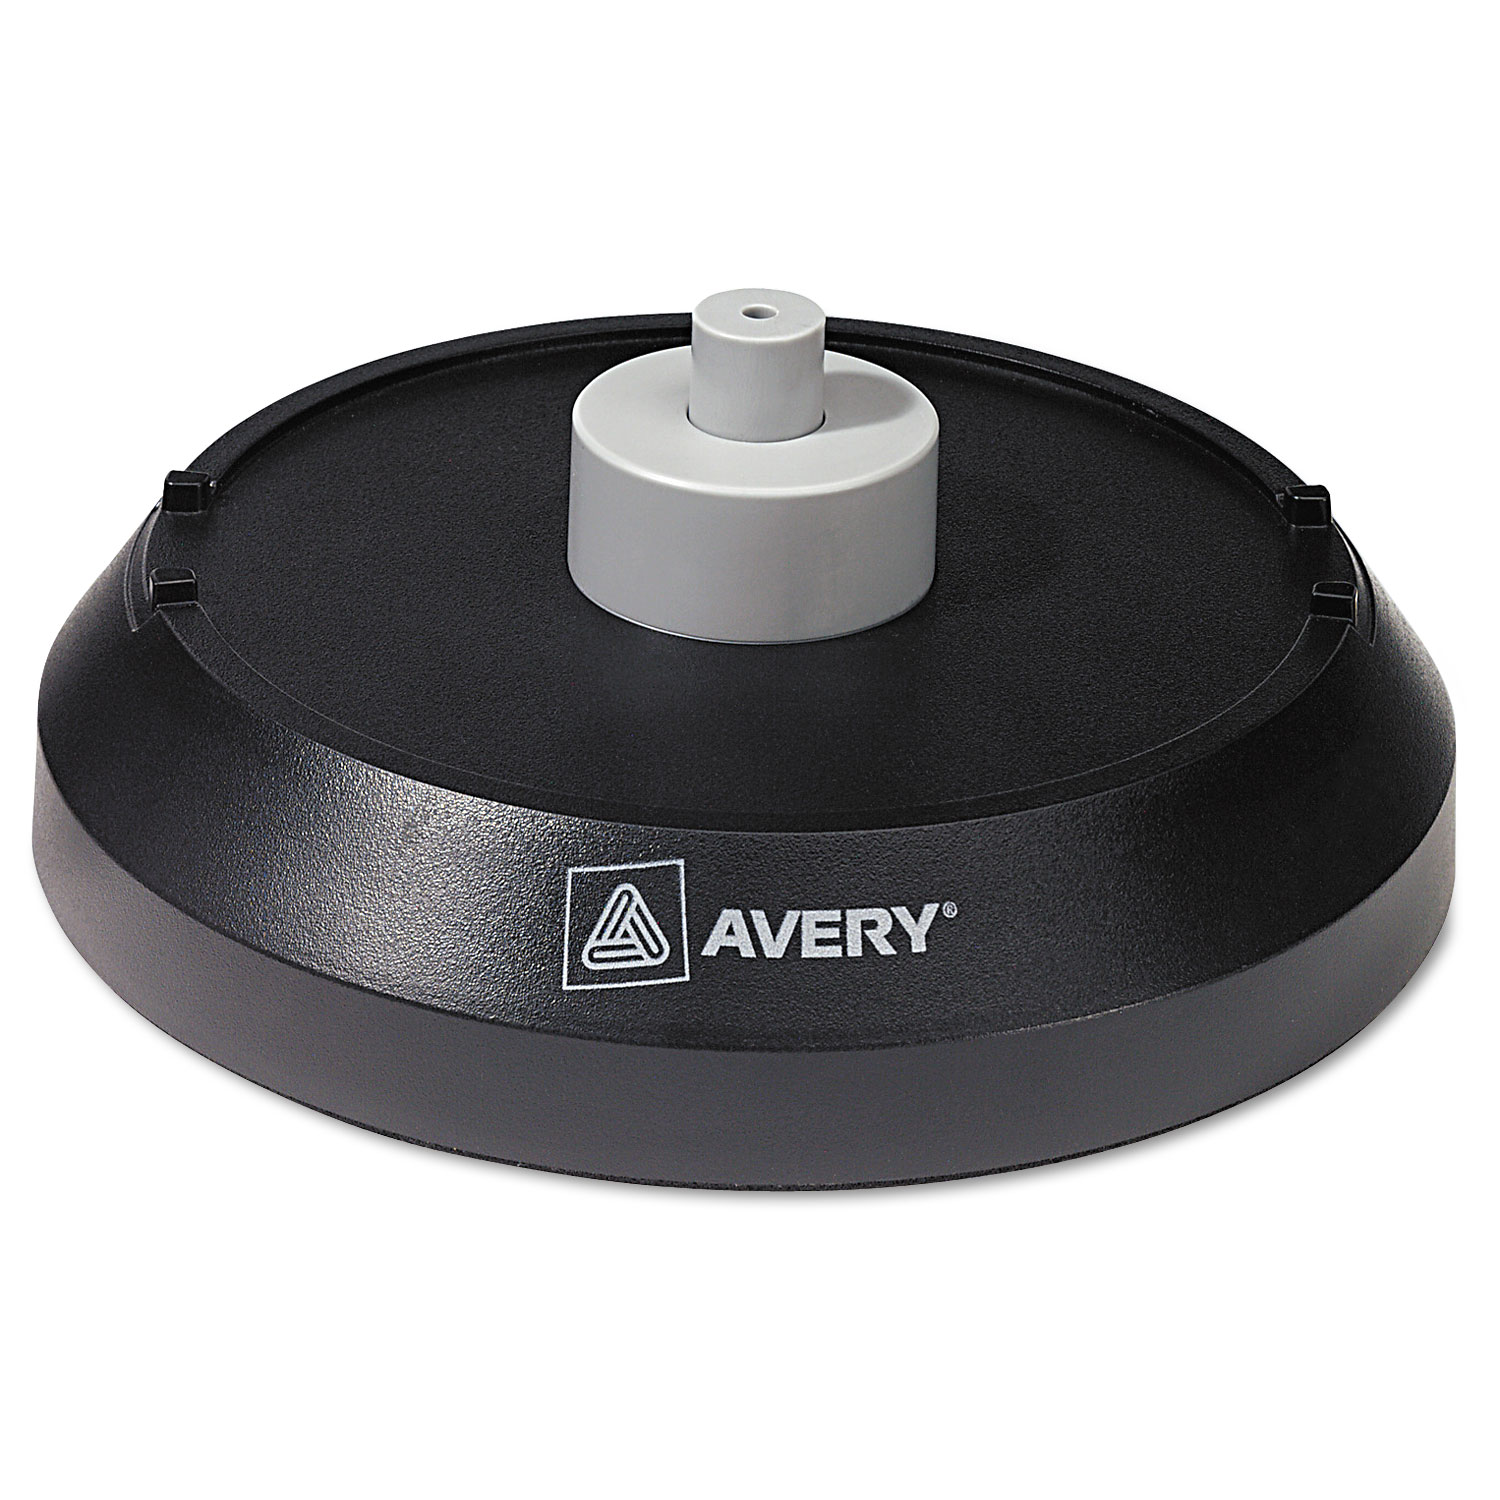  Avery 05699 CD/DVD Label Applicator, Black (AVE05699) 